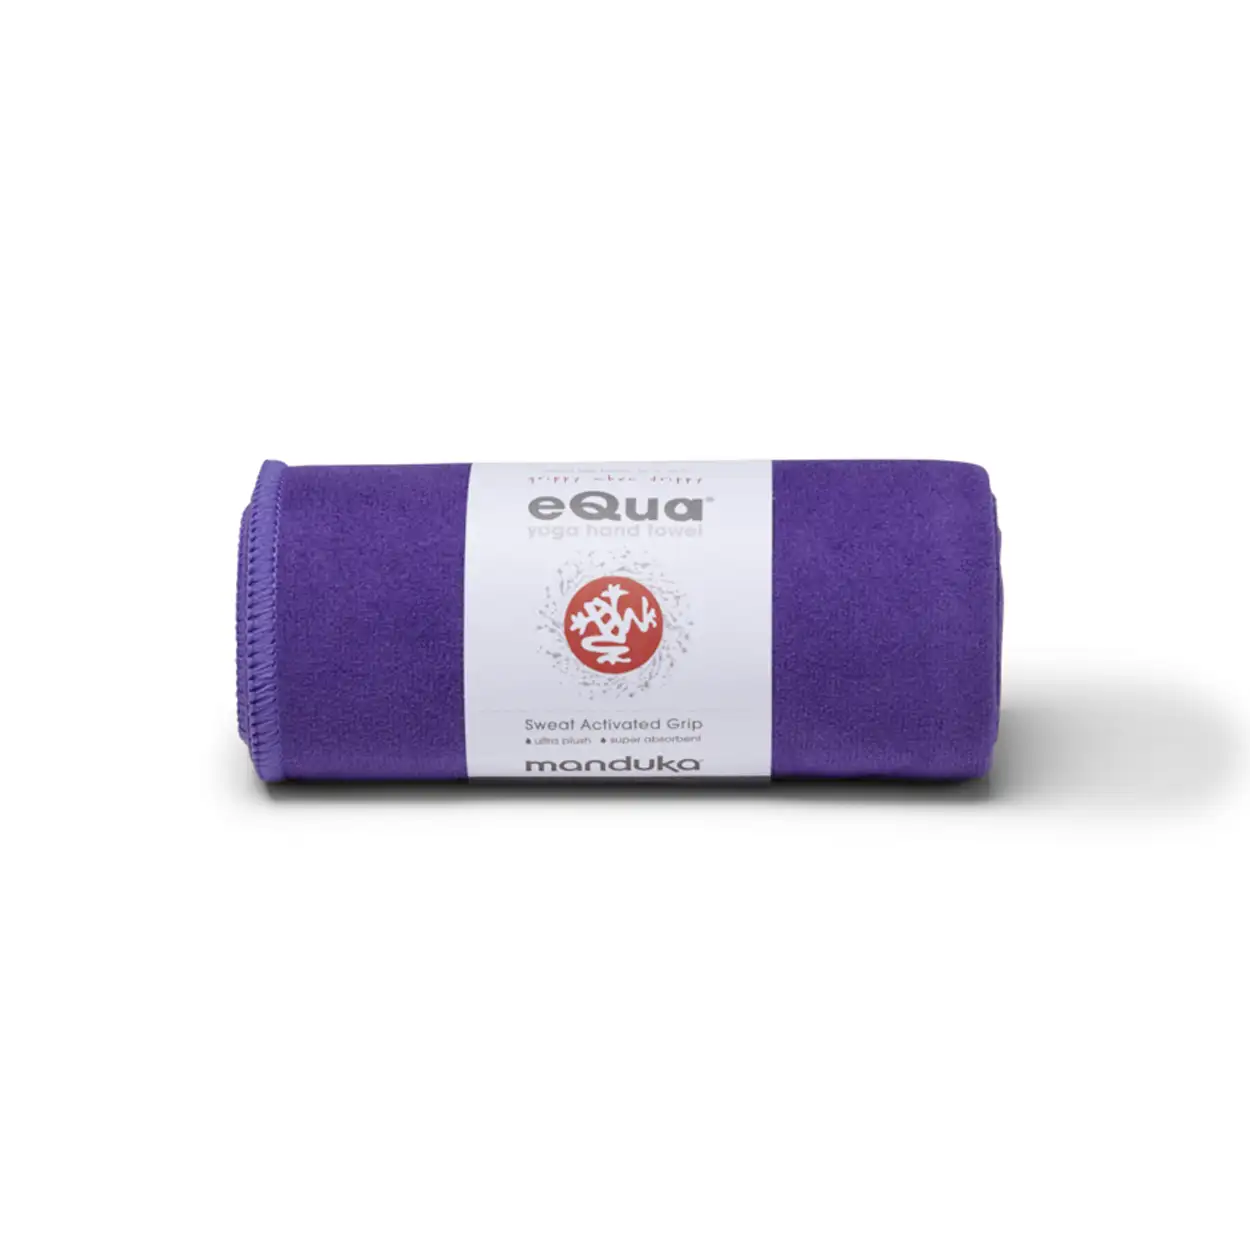 Manduka eQua Yoga Mat Towel